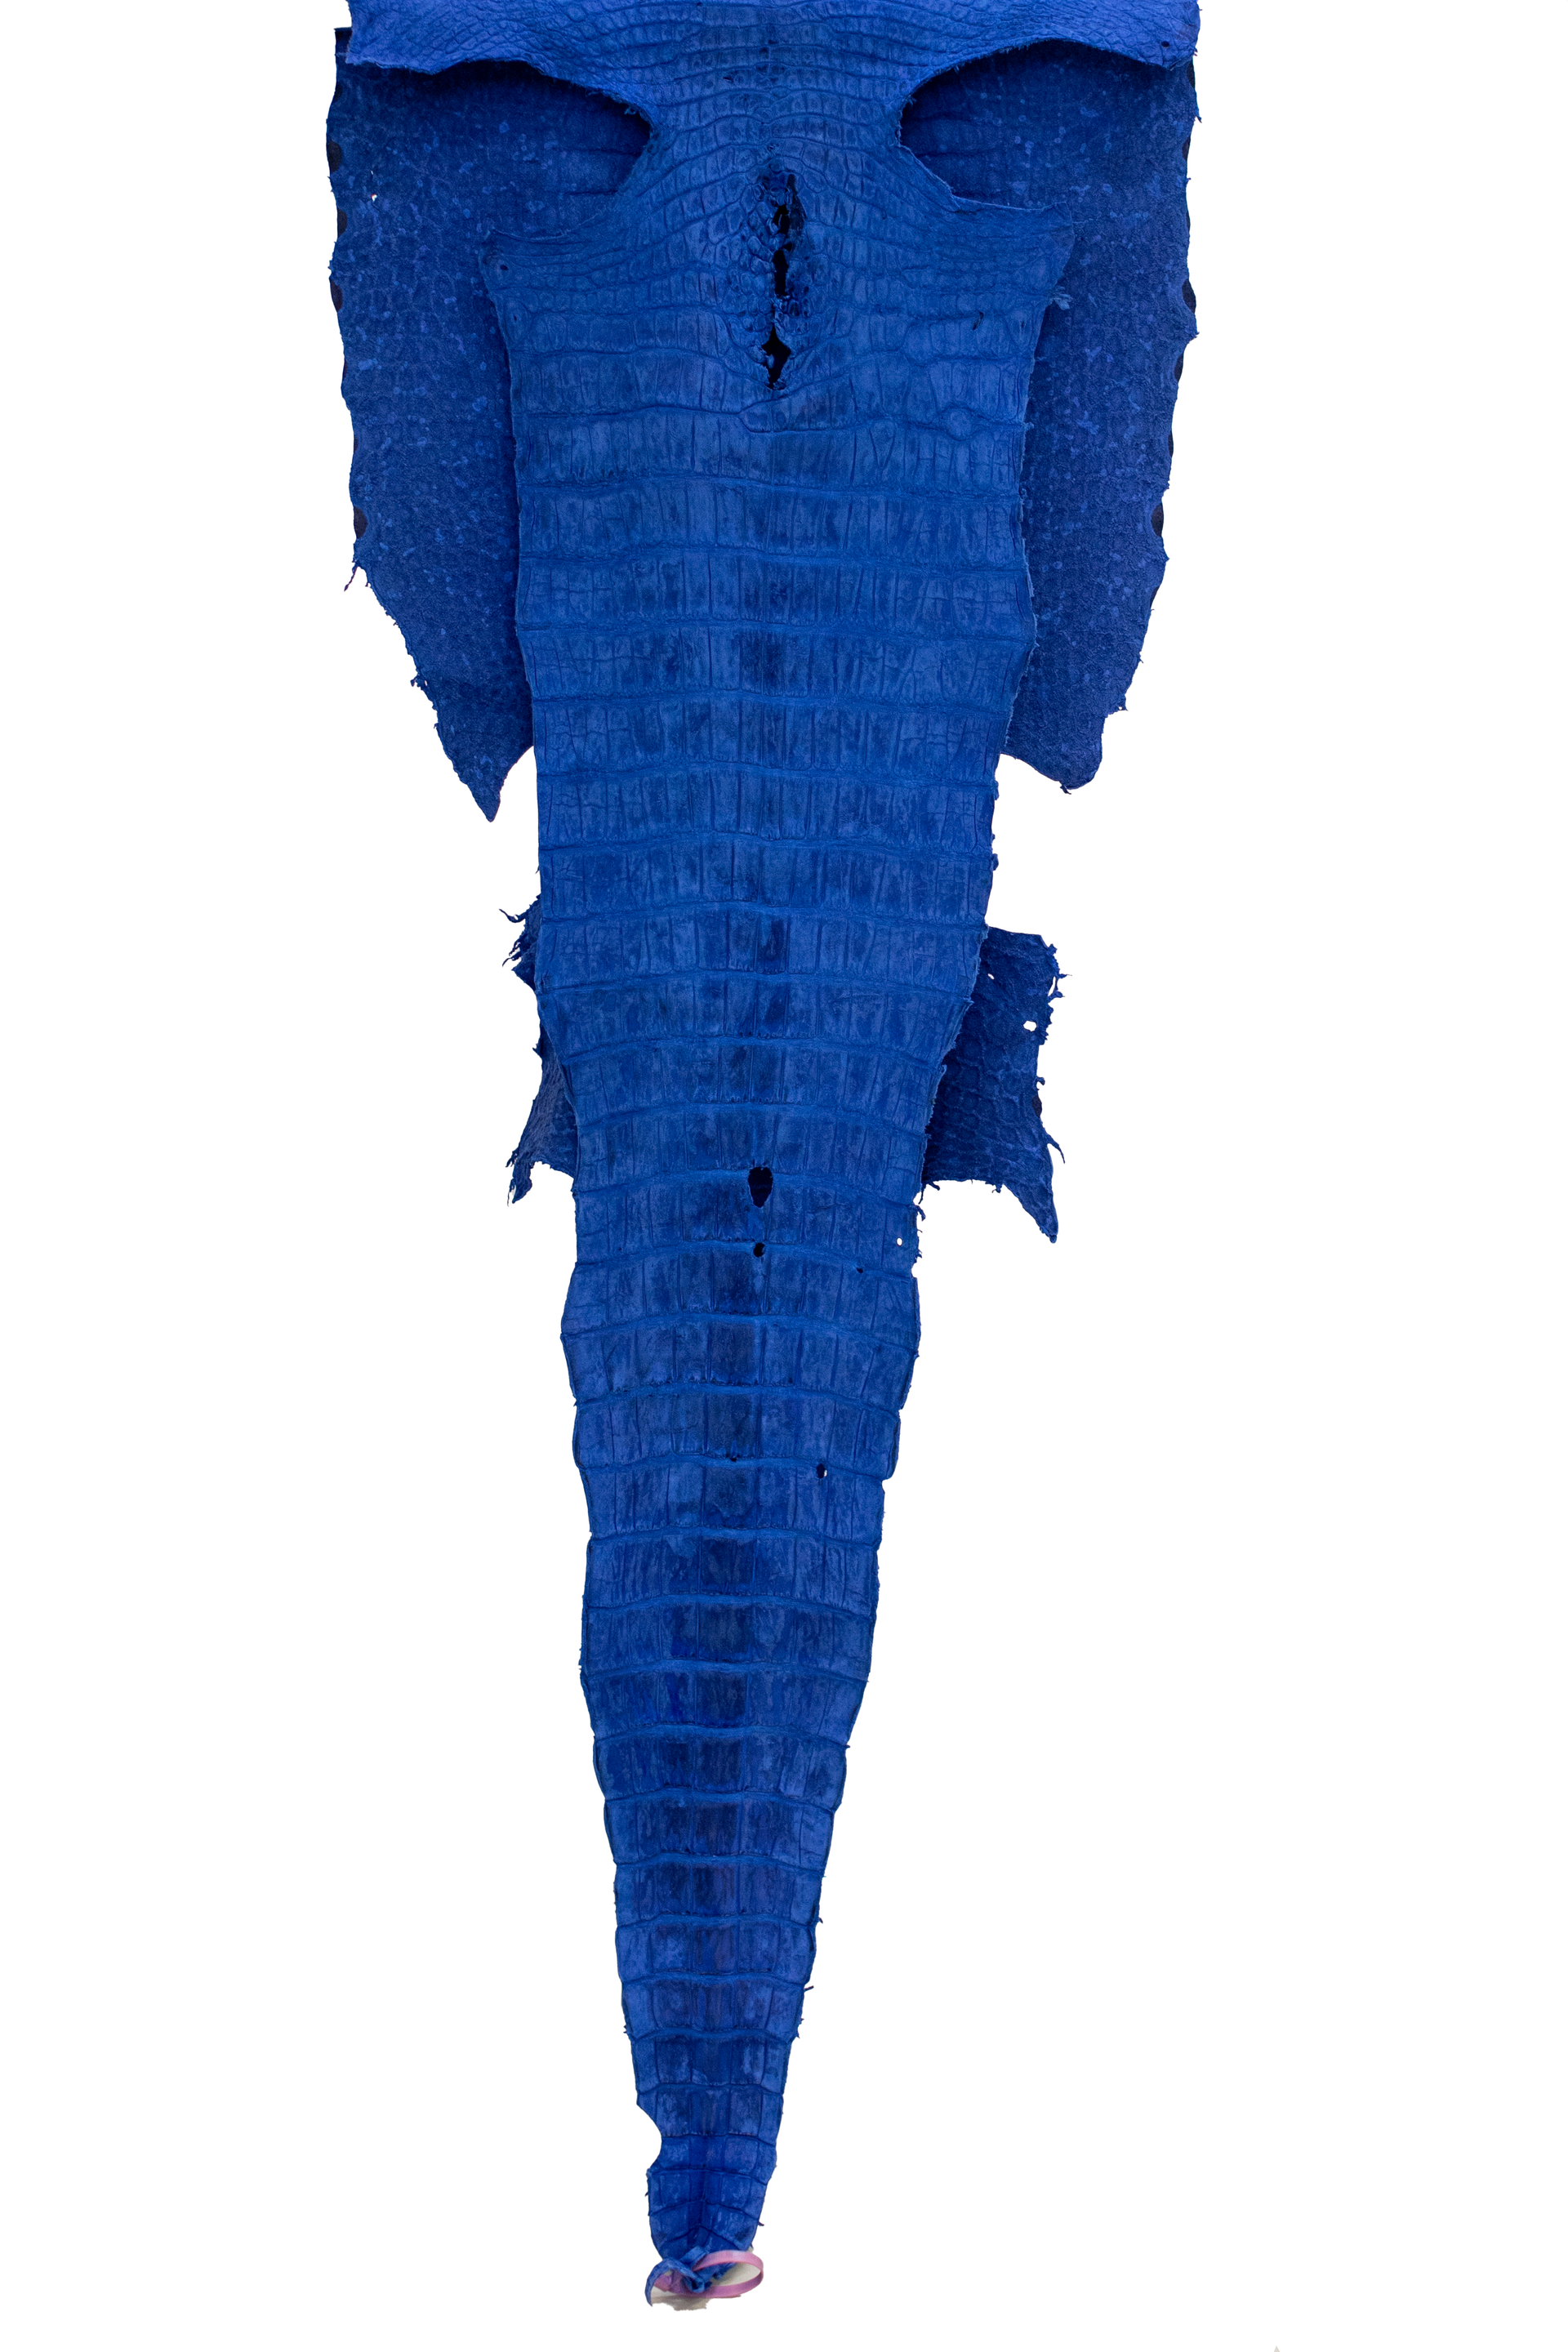 64 cm Grade 3/4 Navy Blue Nubuck Wild American Alligator Leather - Tag: FL21-0006912